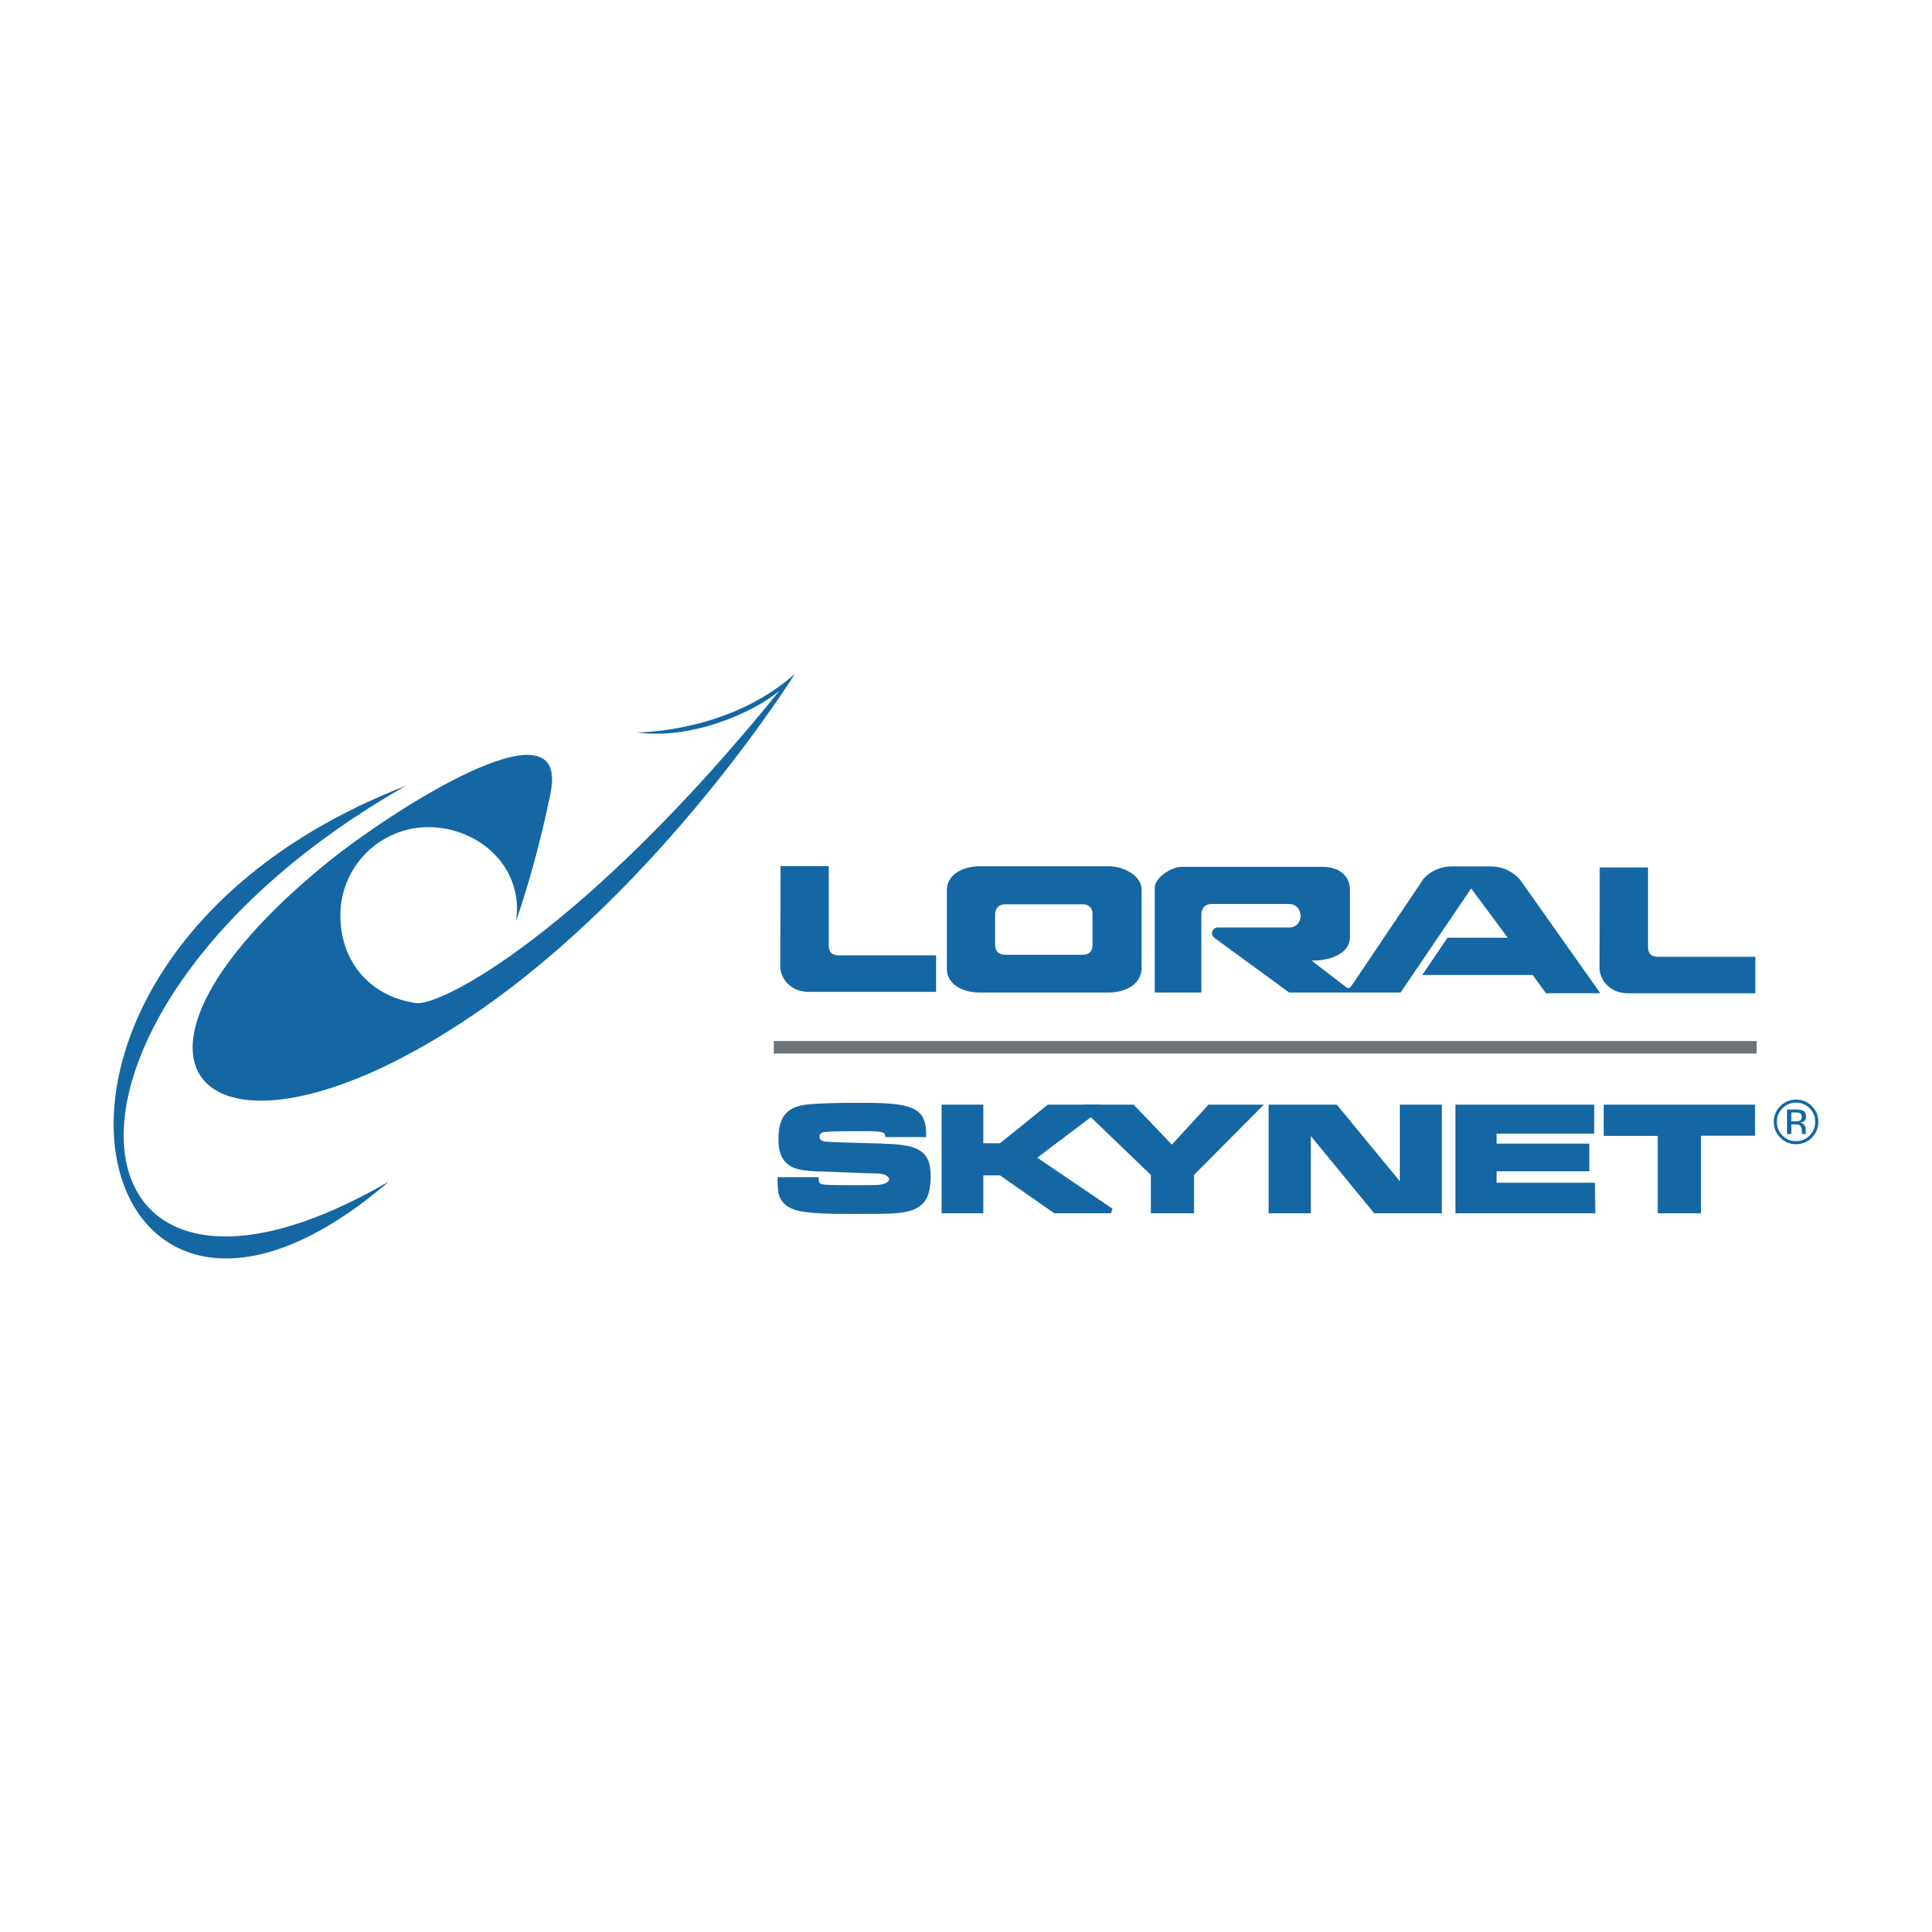 Skynet Logo - Loral Skynet Logo PNG Transparent & SVG Vector - Freebie Supply